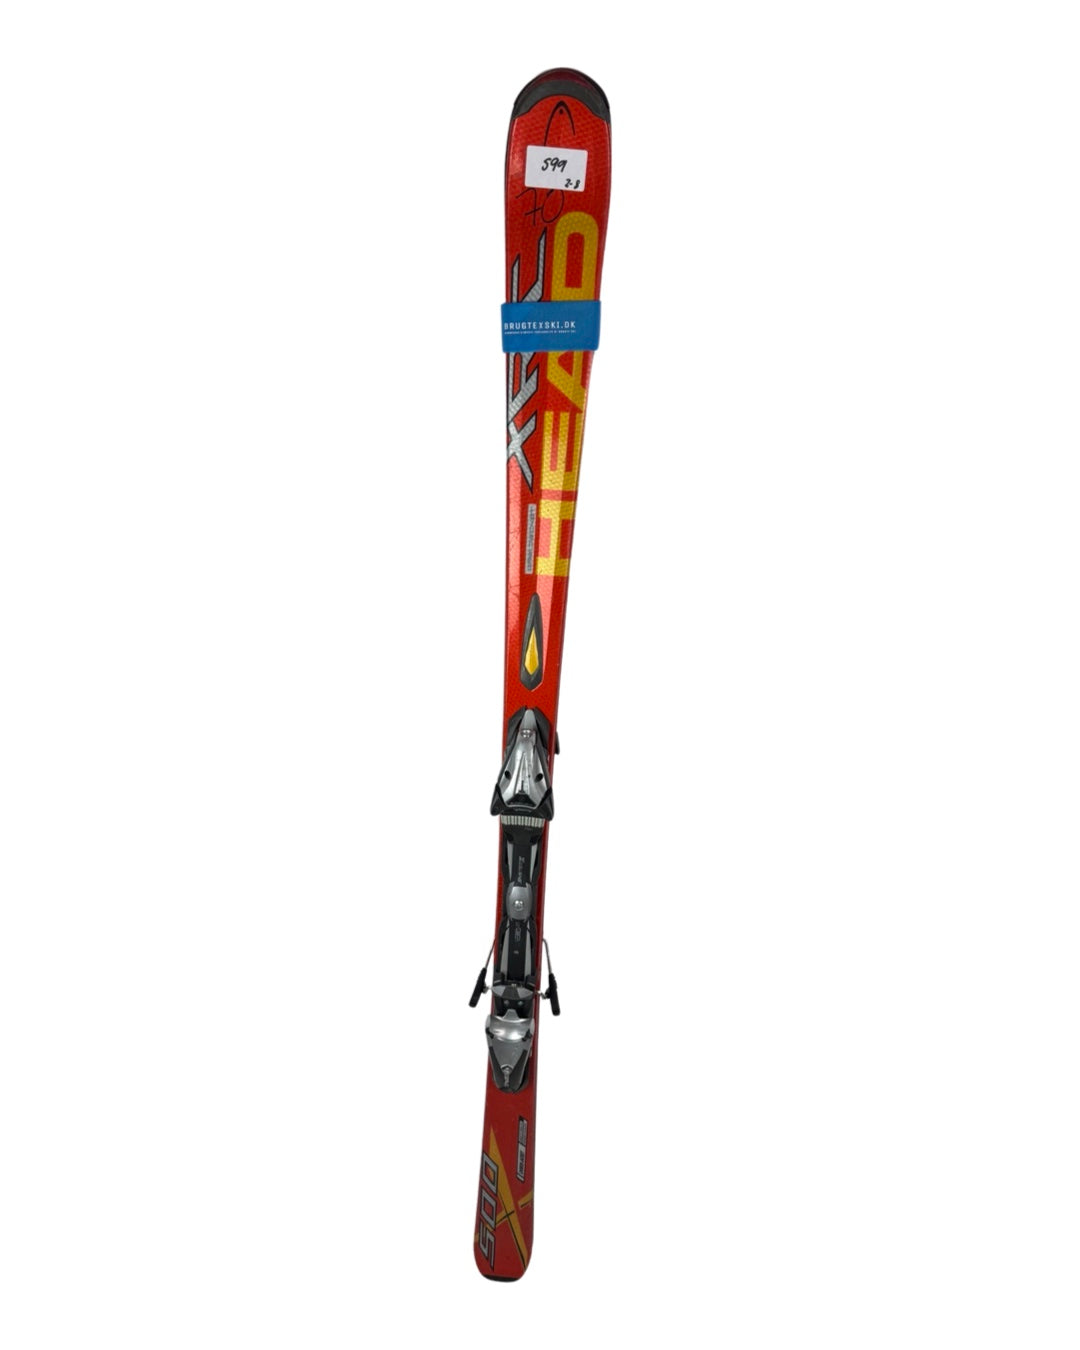 Voksen ski - blandet 599 2